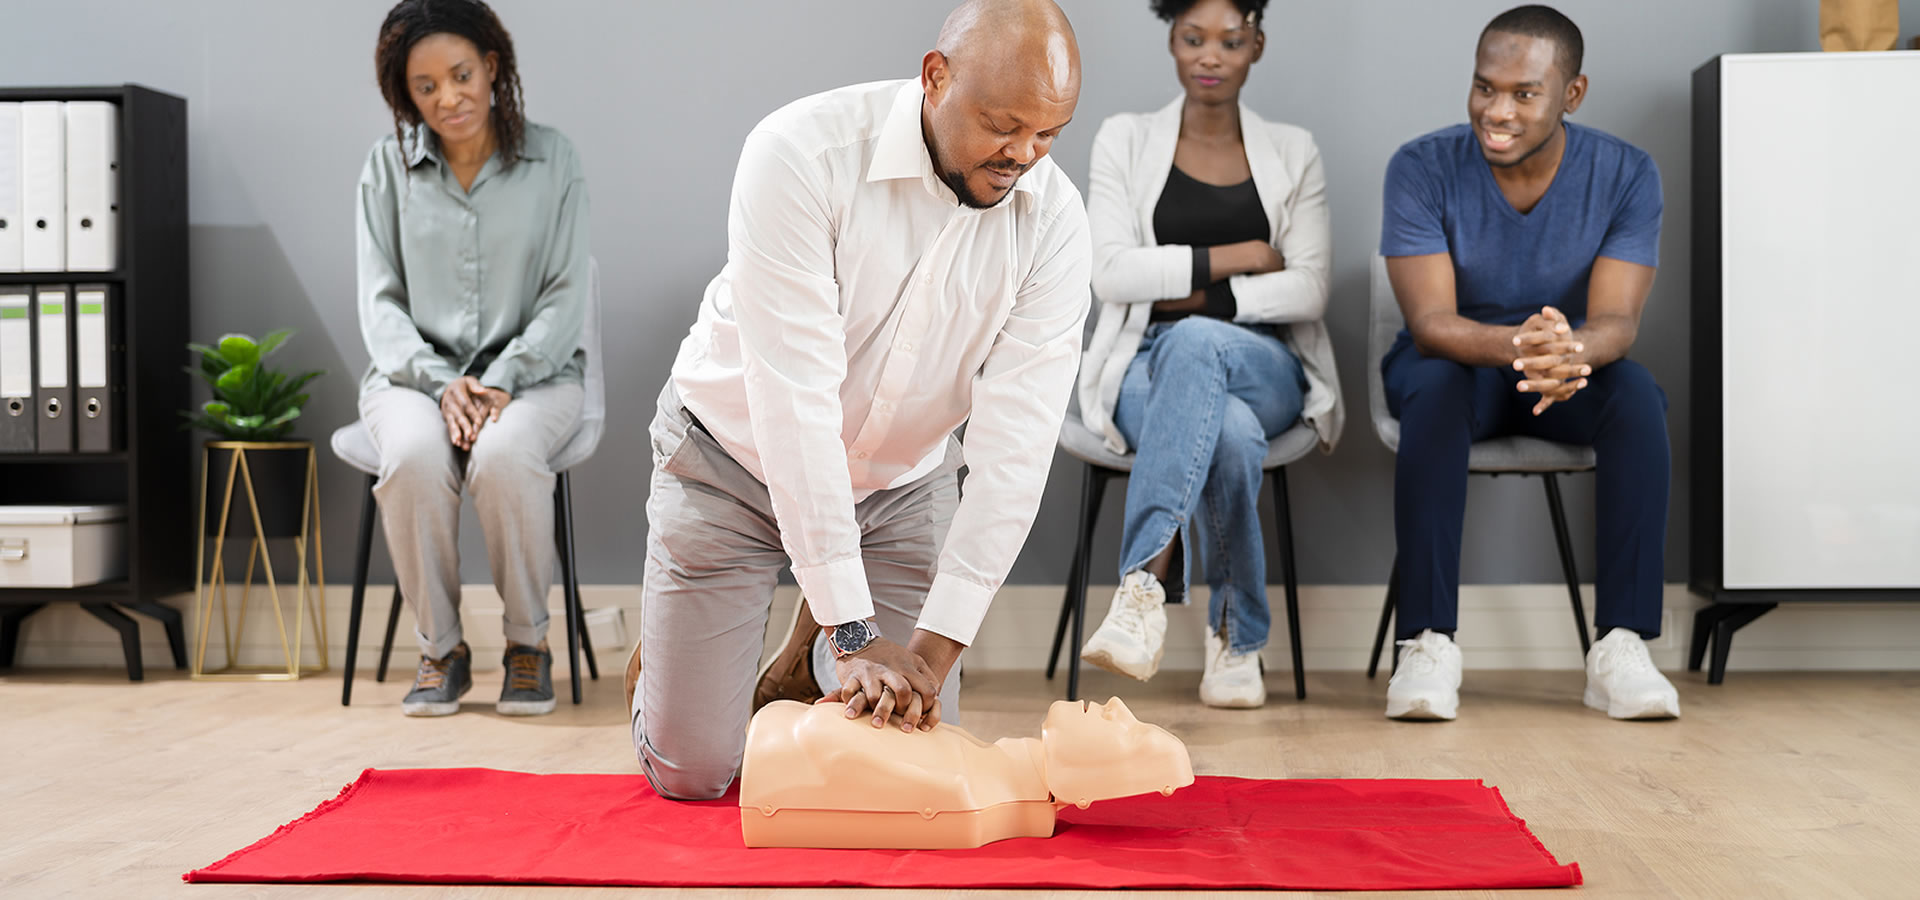 Can CPR Cause Internal Bleeding?